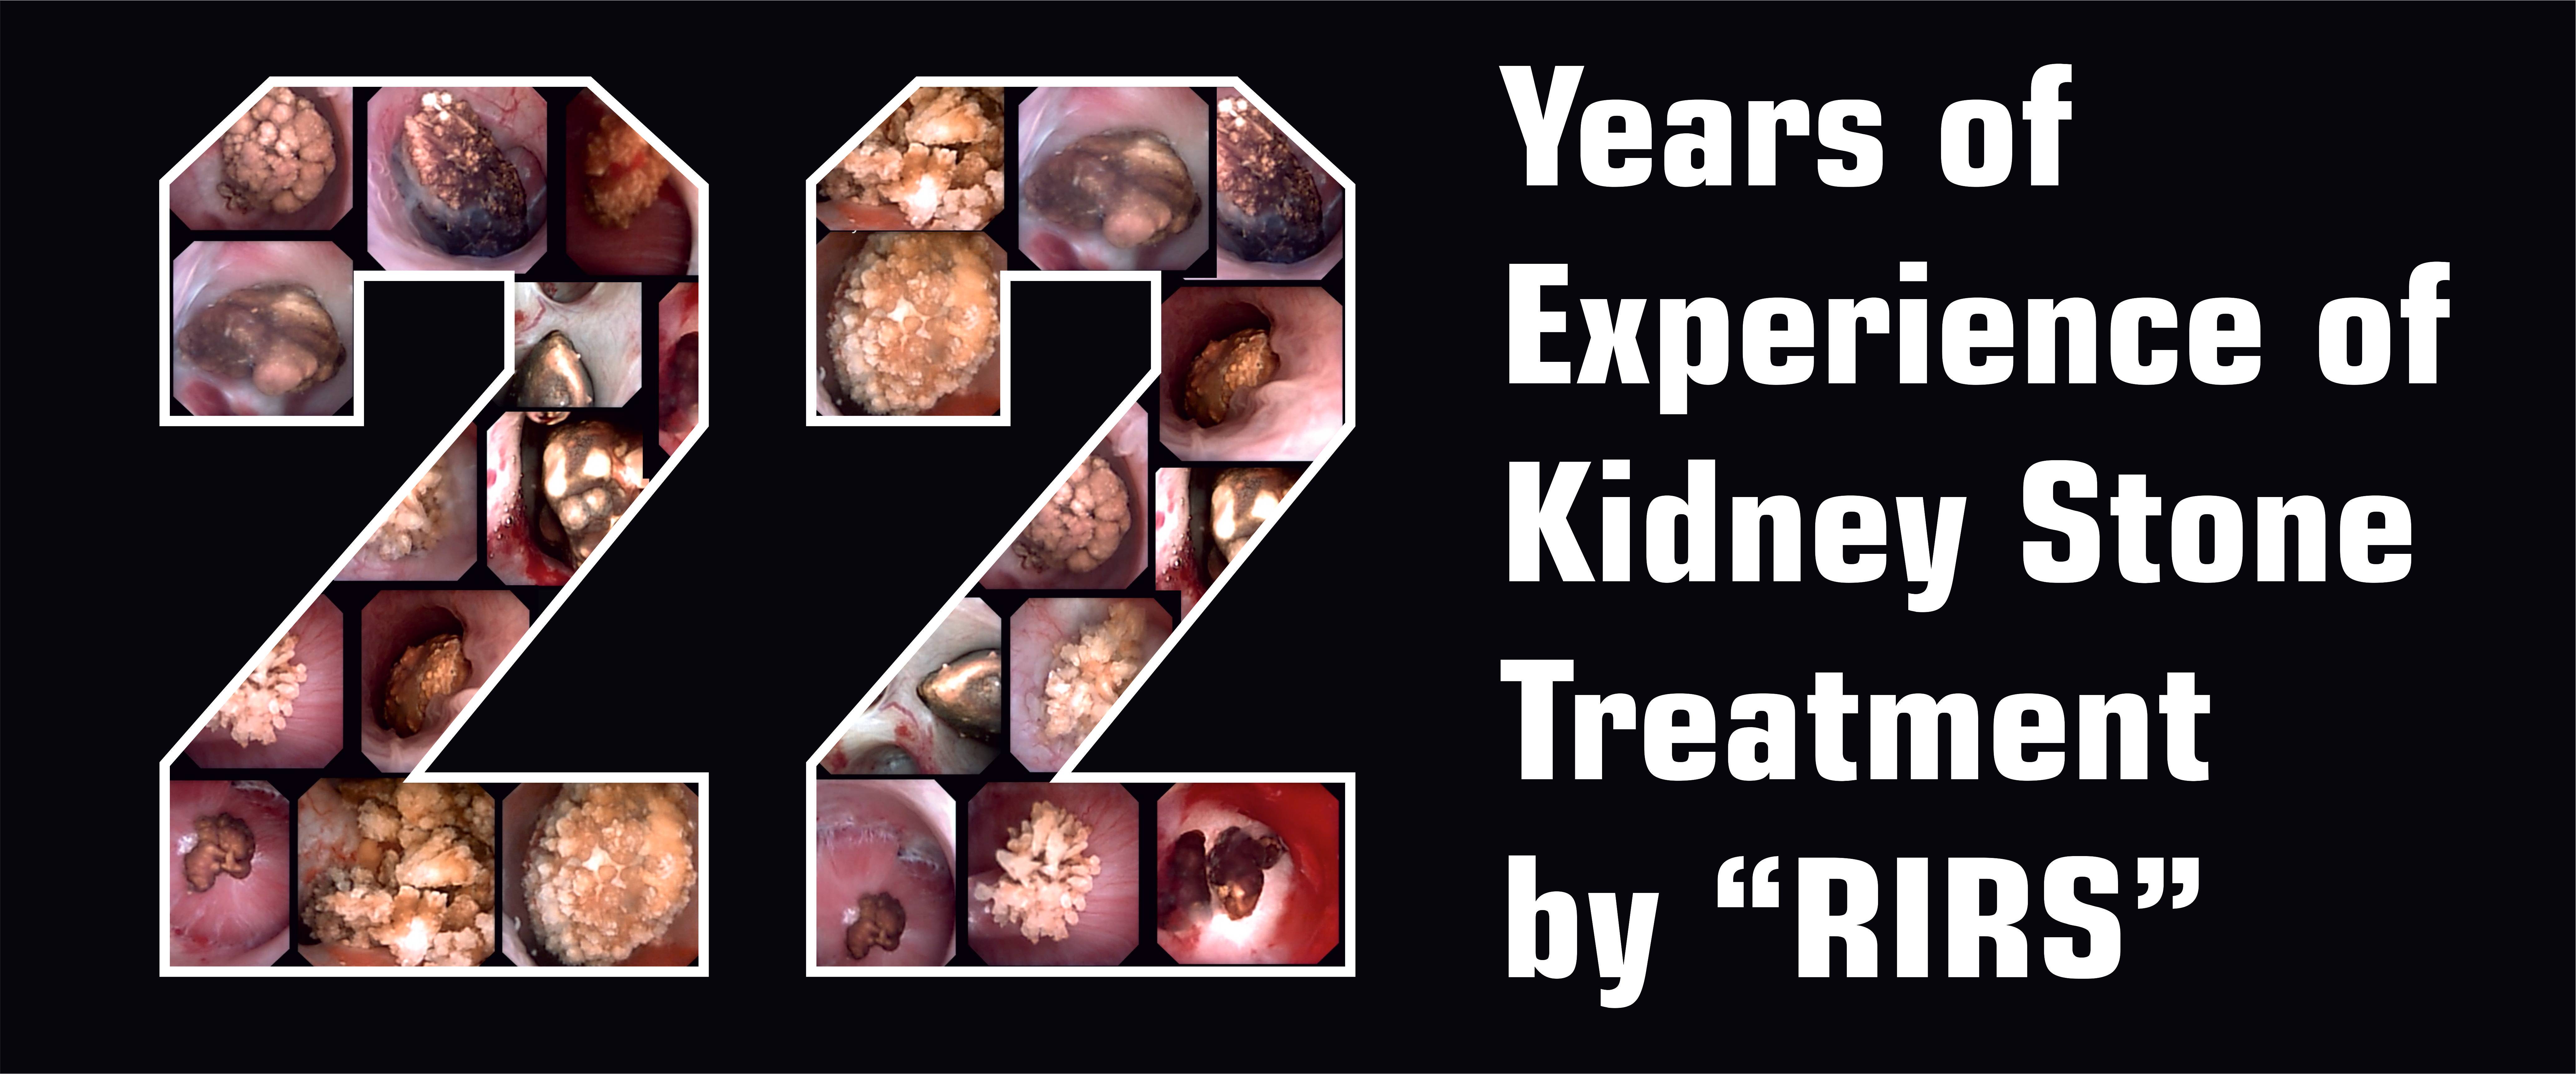 22 Years of Kidney Stone Treatment